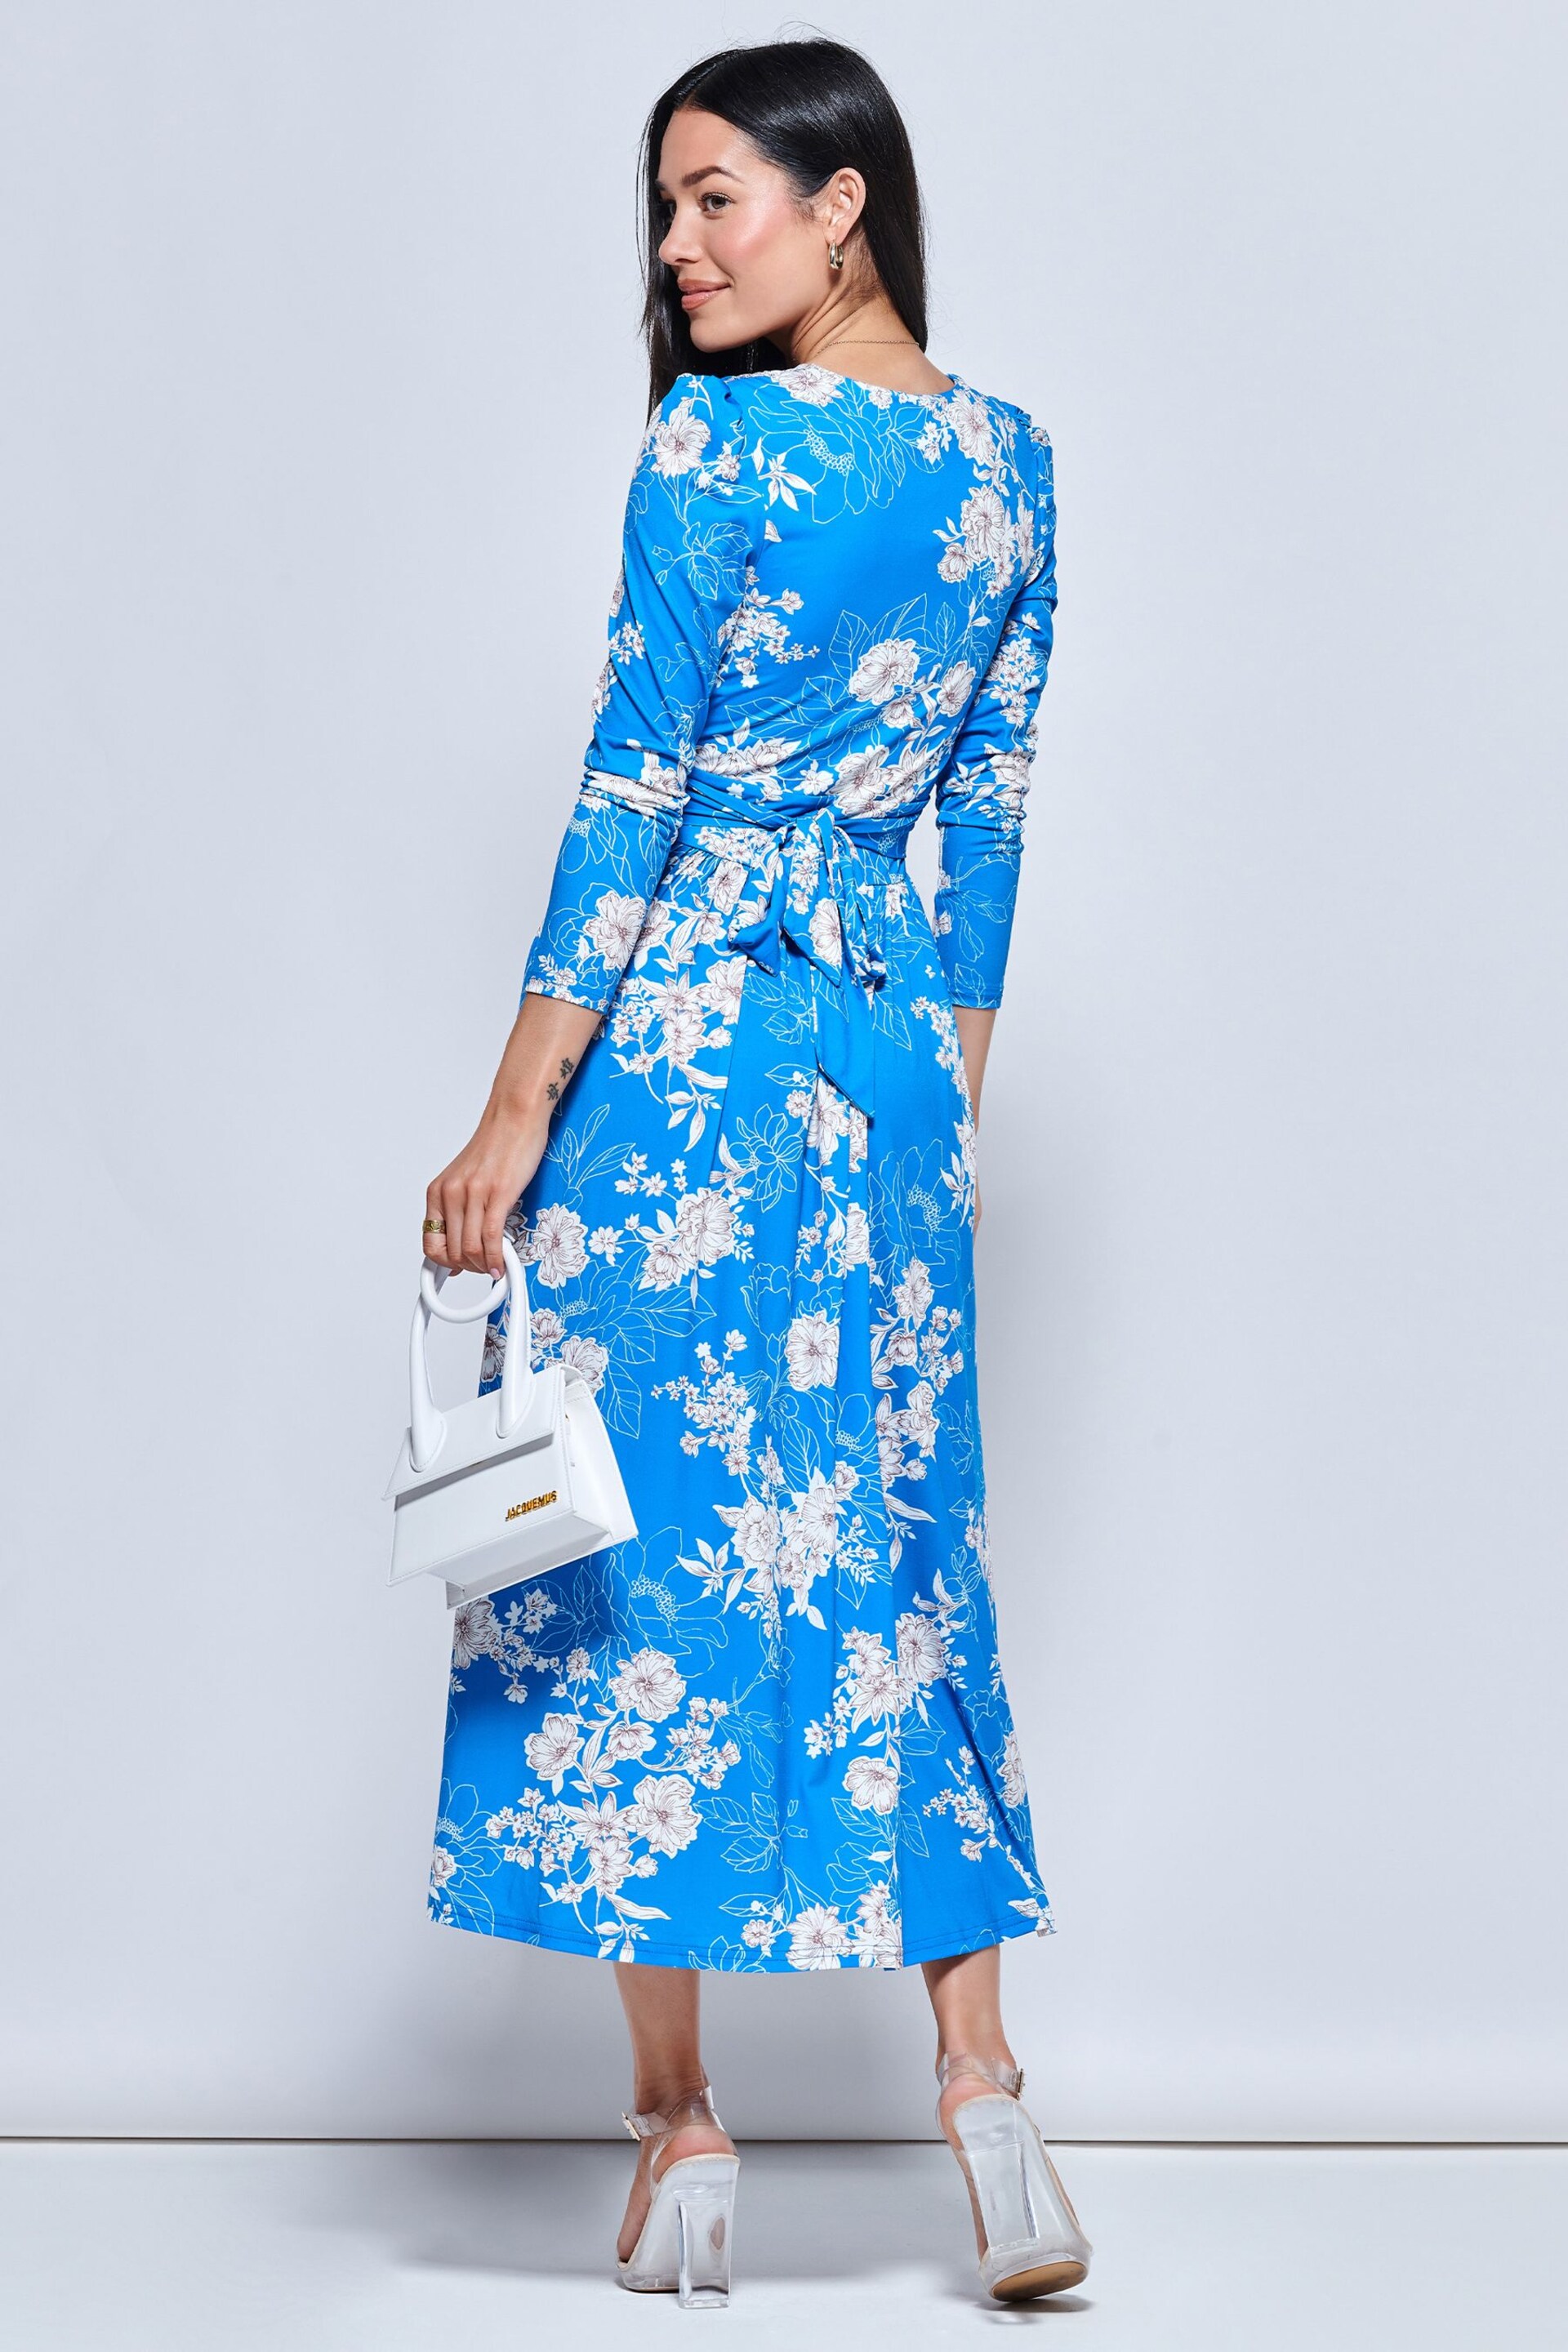 Jolie Moi Blue Devorah Printed Jersey Long Sleeve Maxi Dress - Image 2 of 6